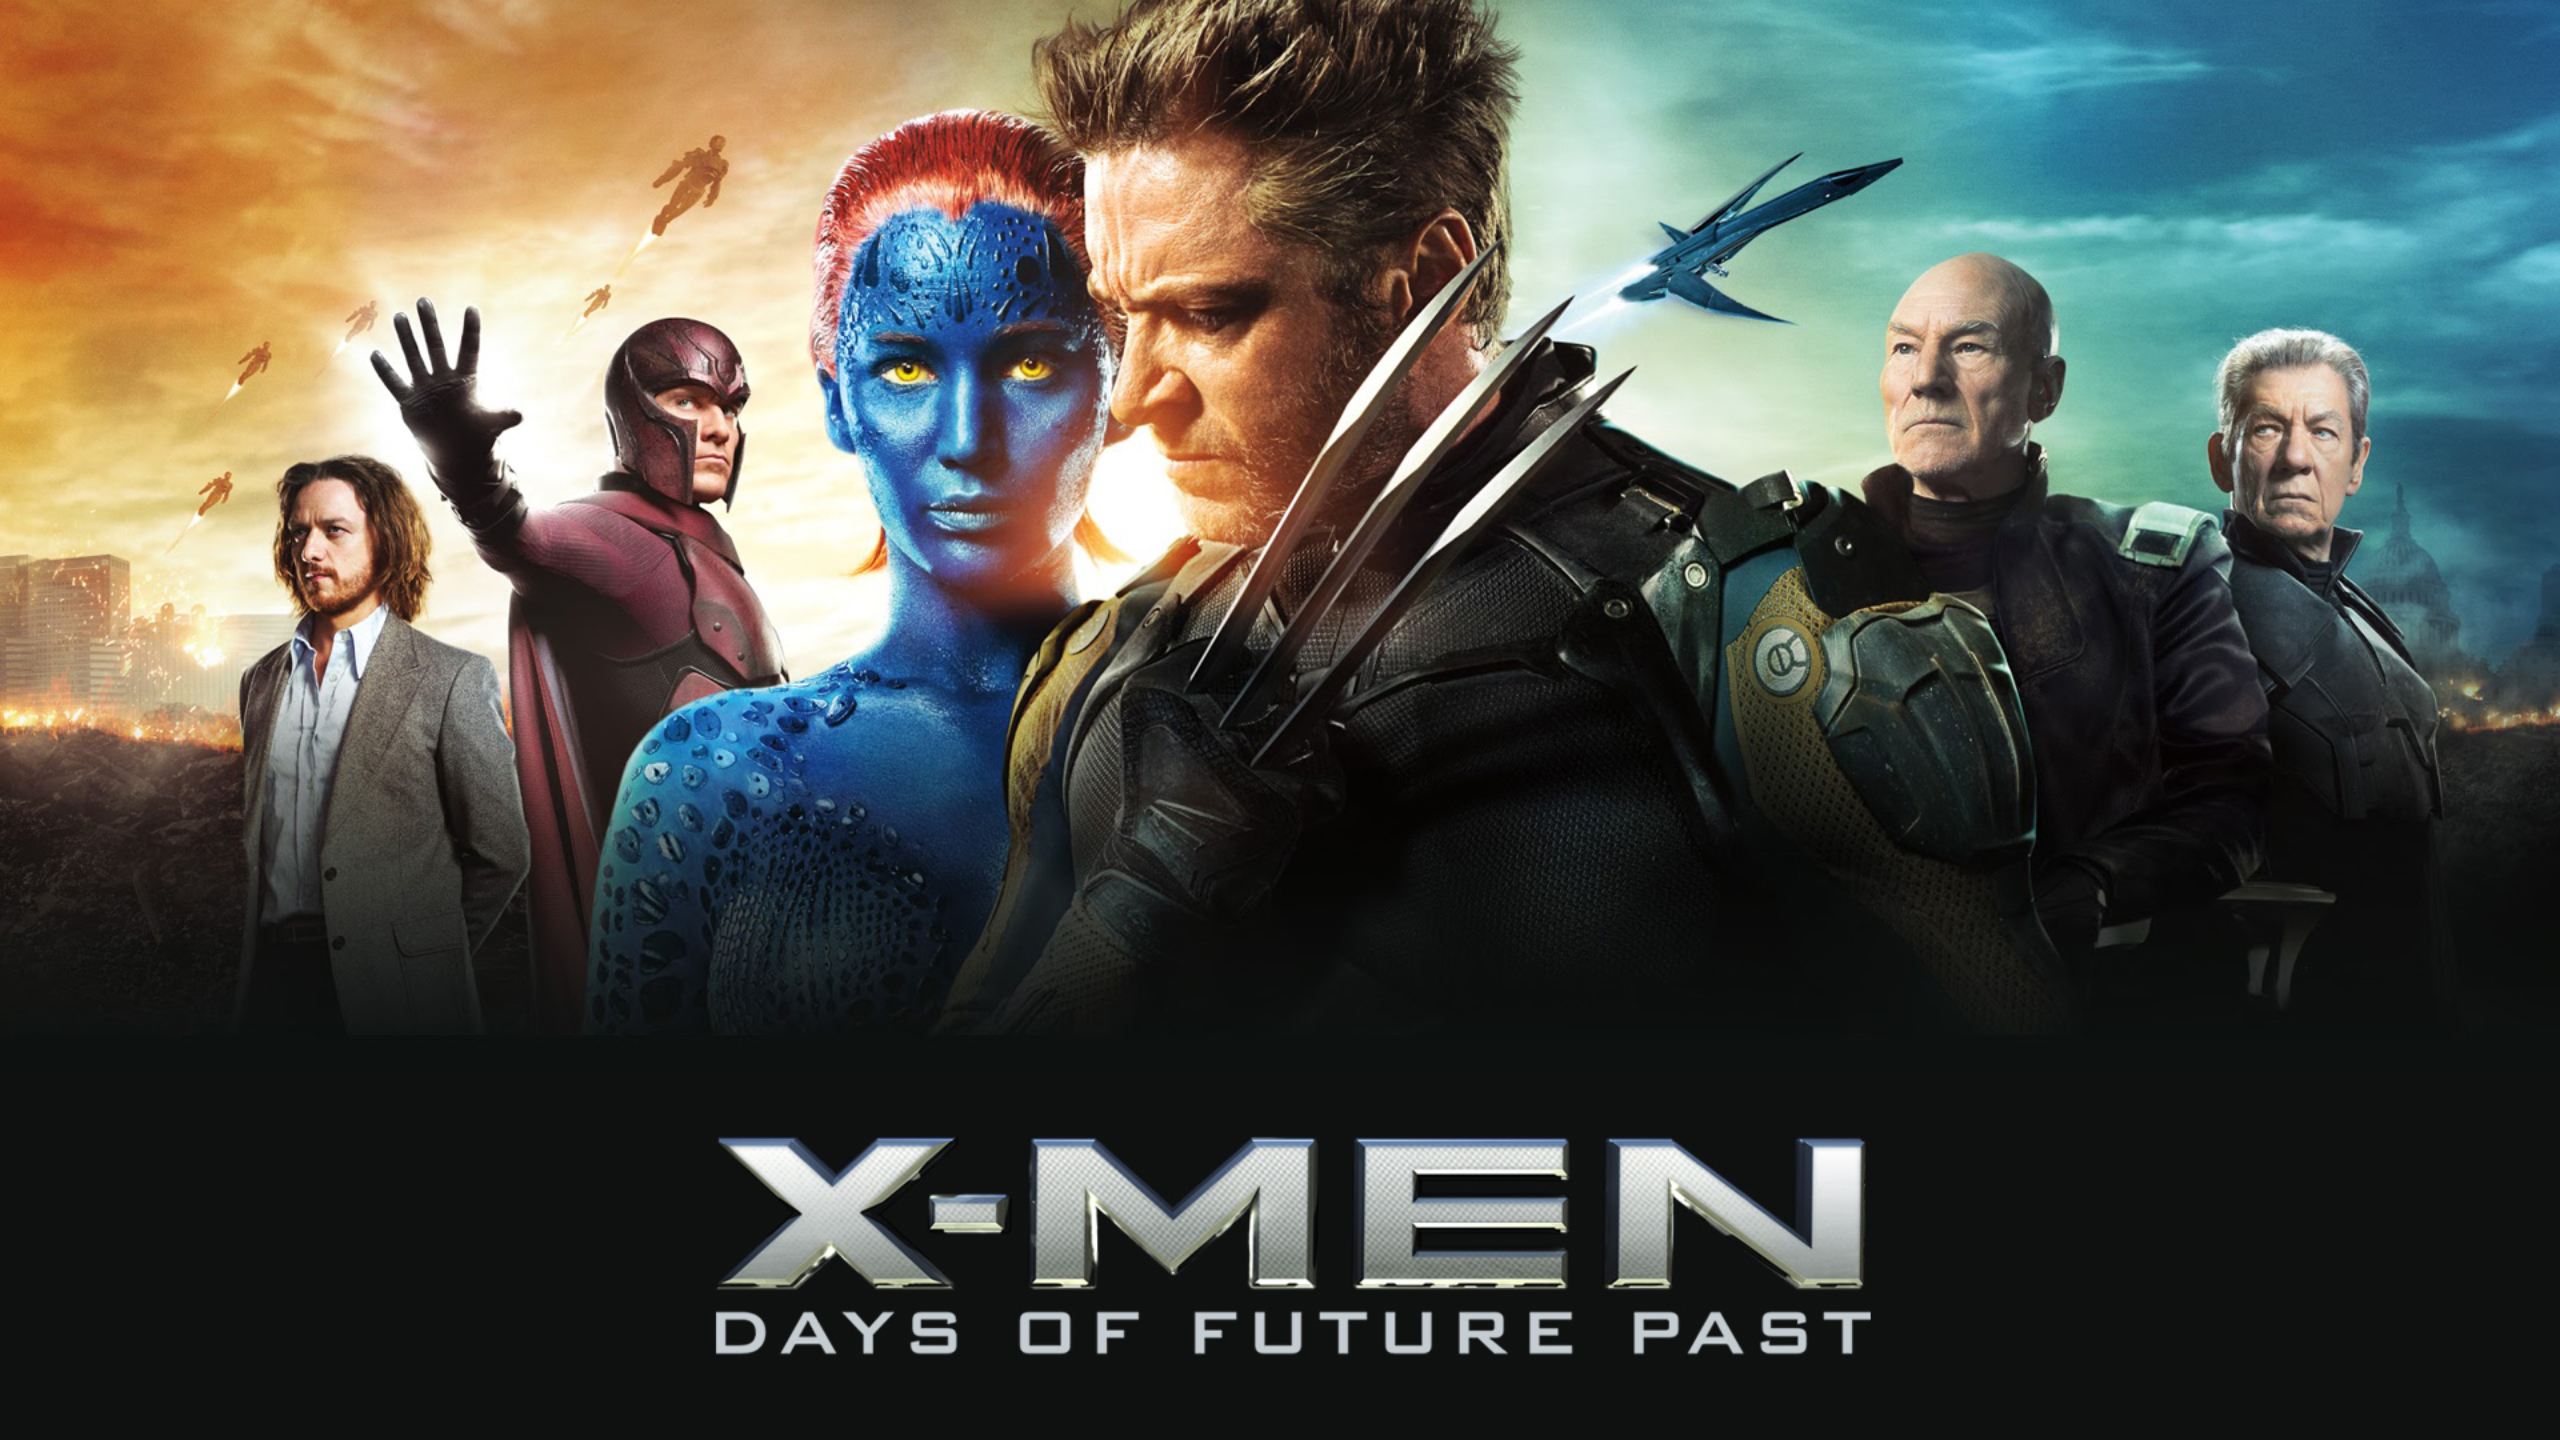 x men: days of future past, movie, charles xavier, erik lehnsherr, logan james howlett, magneto (marvel comics), mystique (marvel comics), raven darkhölme, wolverine, x men